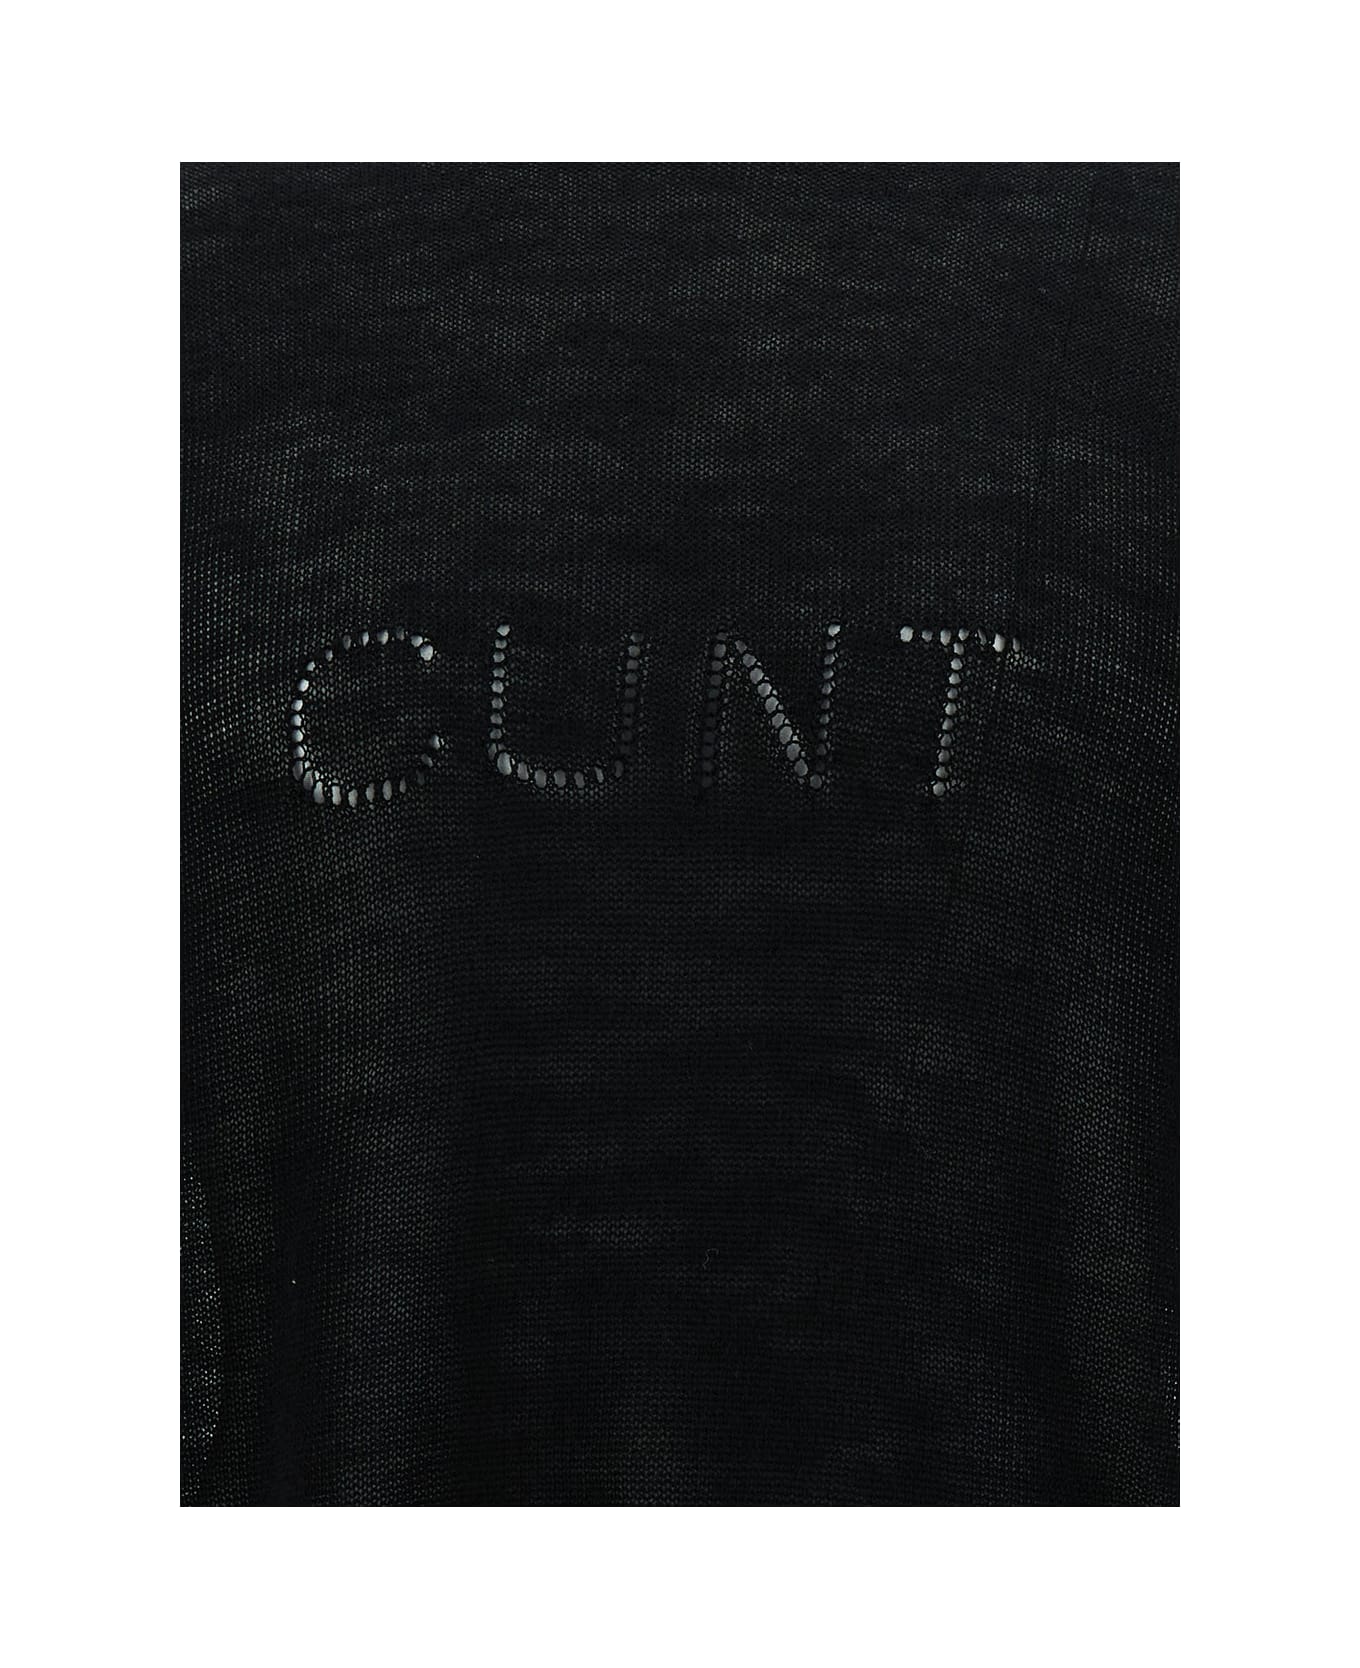 Rick Owens Black Long Sleeve Top With Cunt Writing In Wool Man - Black